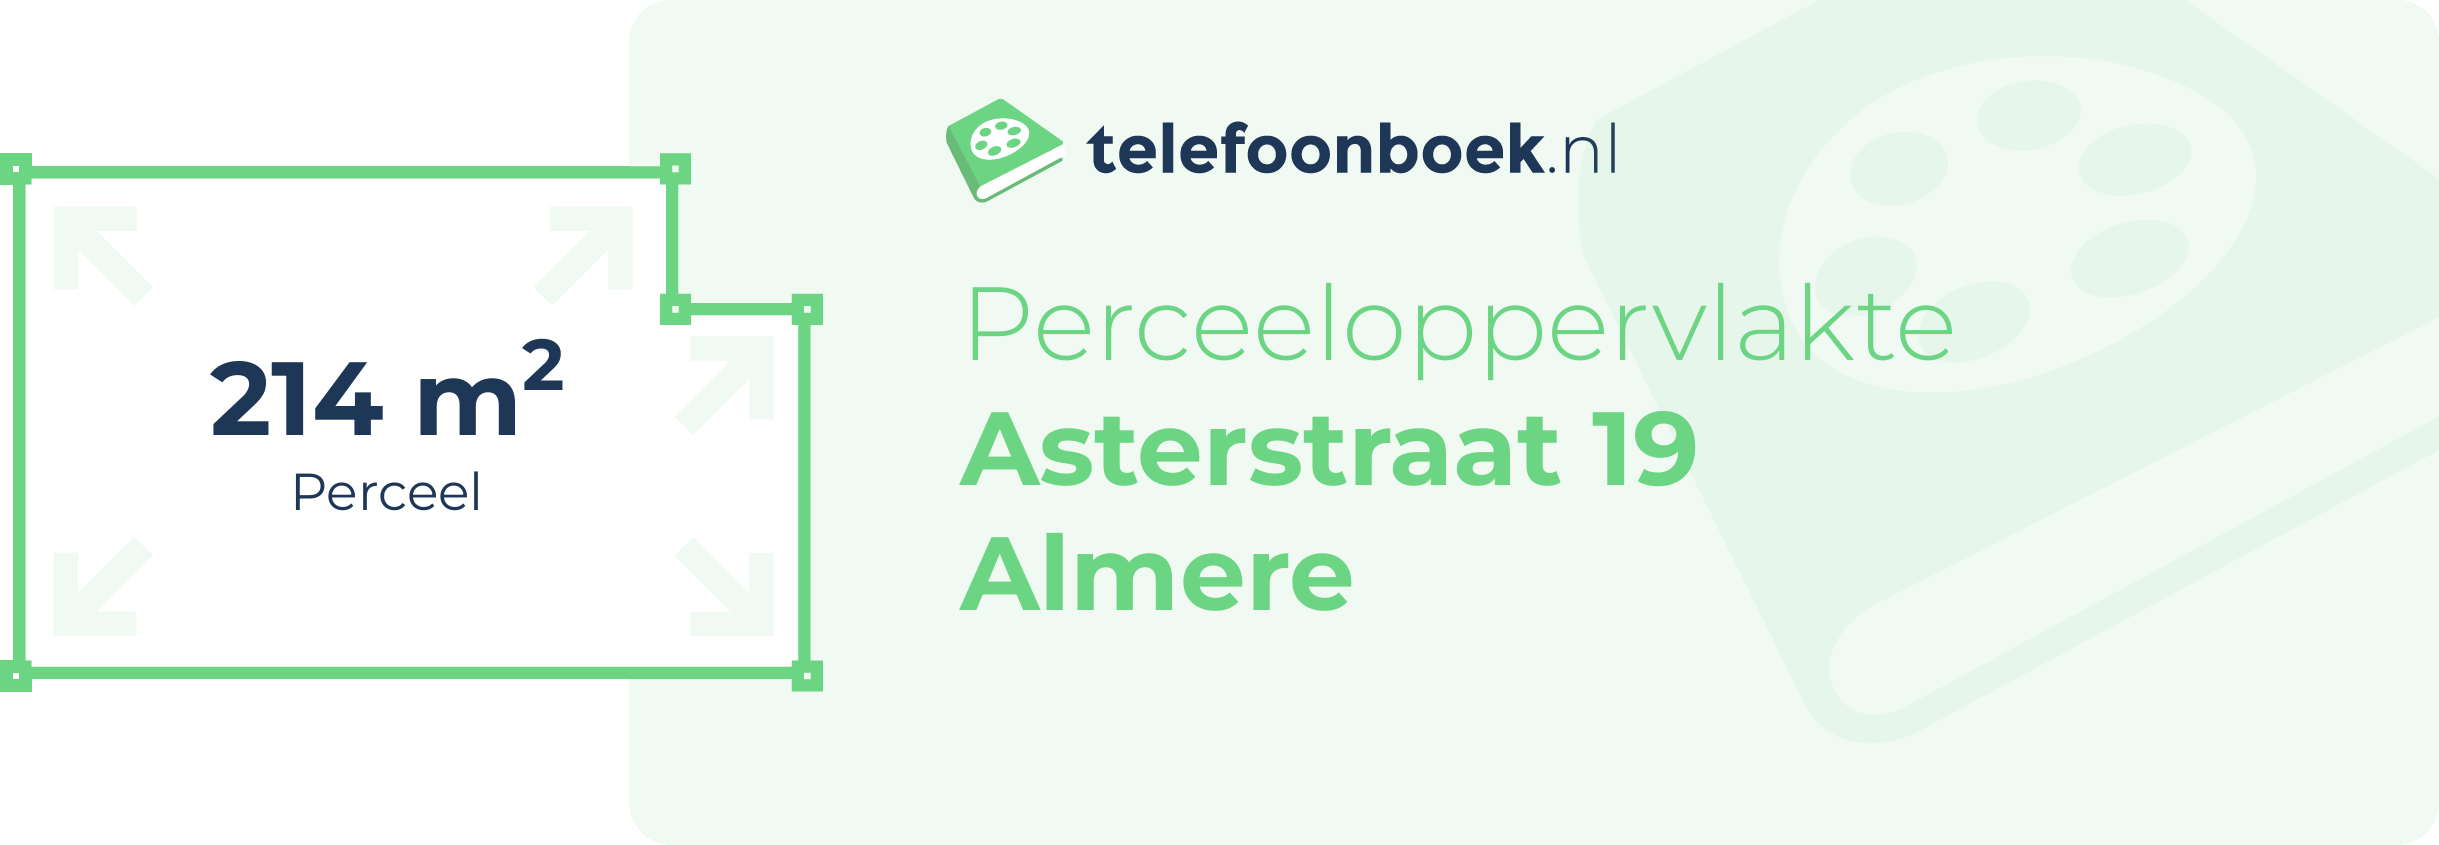 Perceeloppervlakte Asterstraat 19 Almere